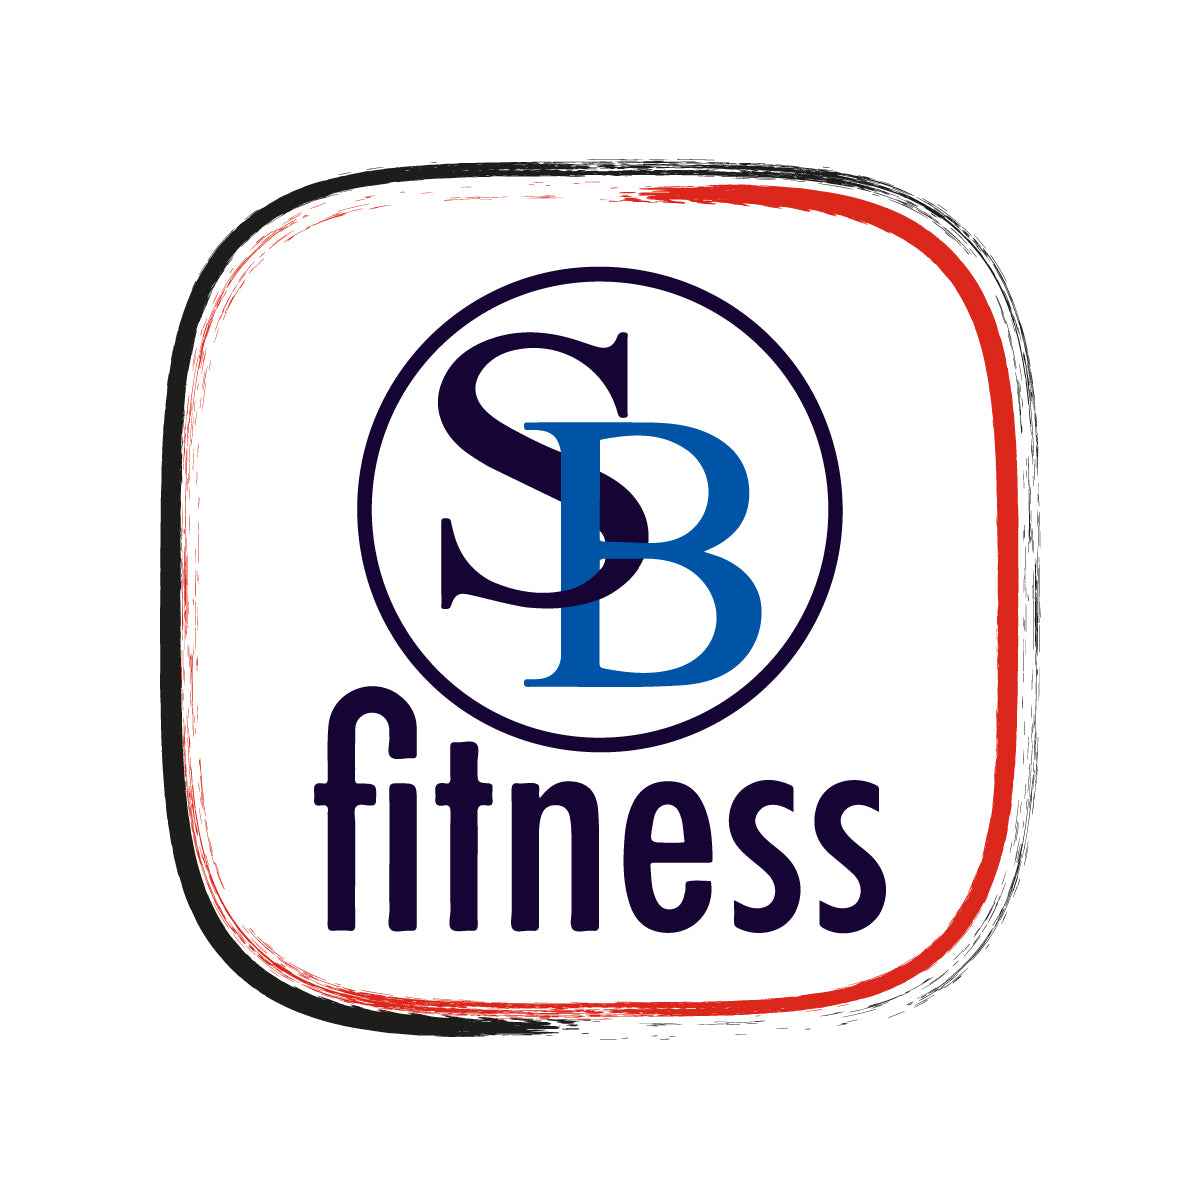 SB Fitness